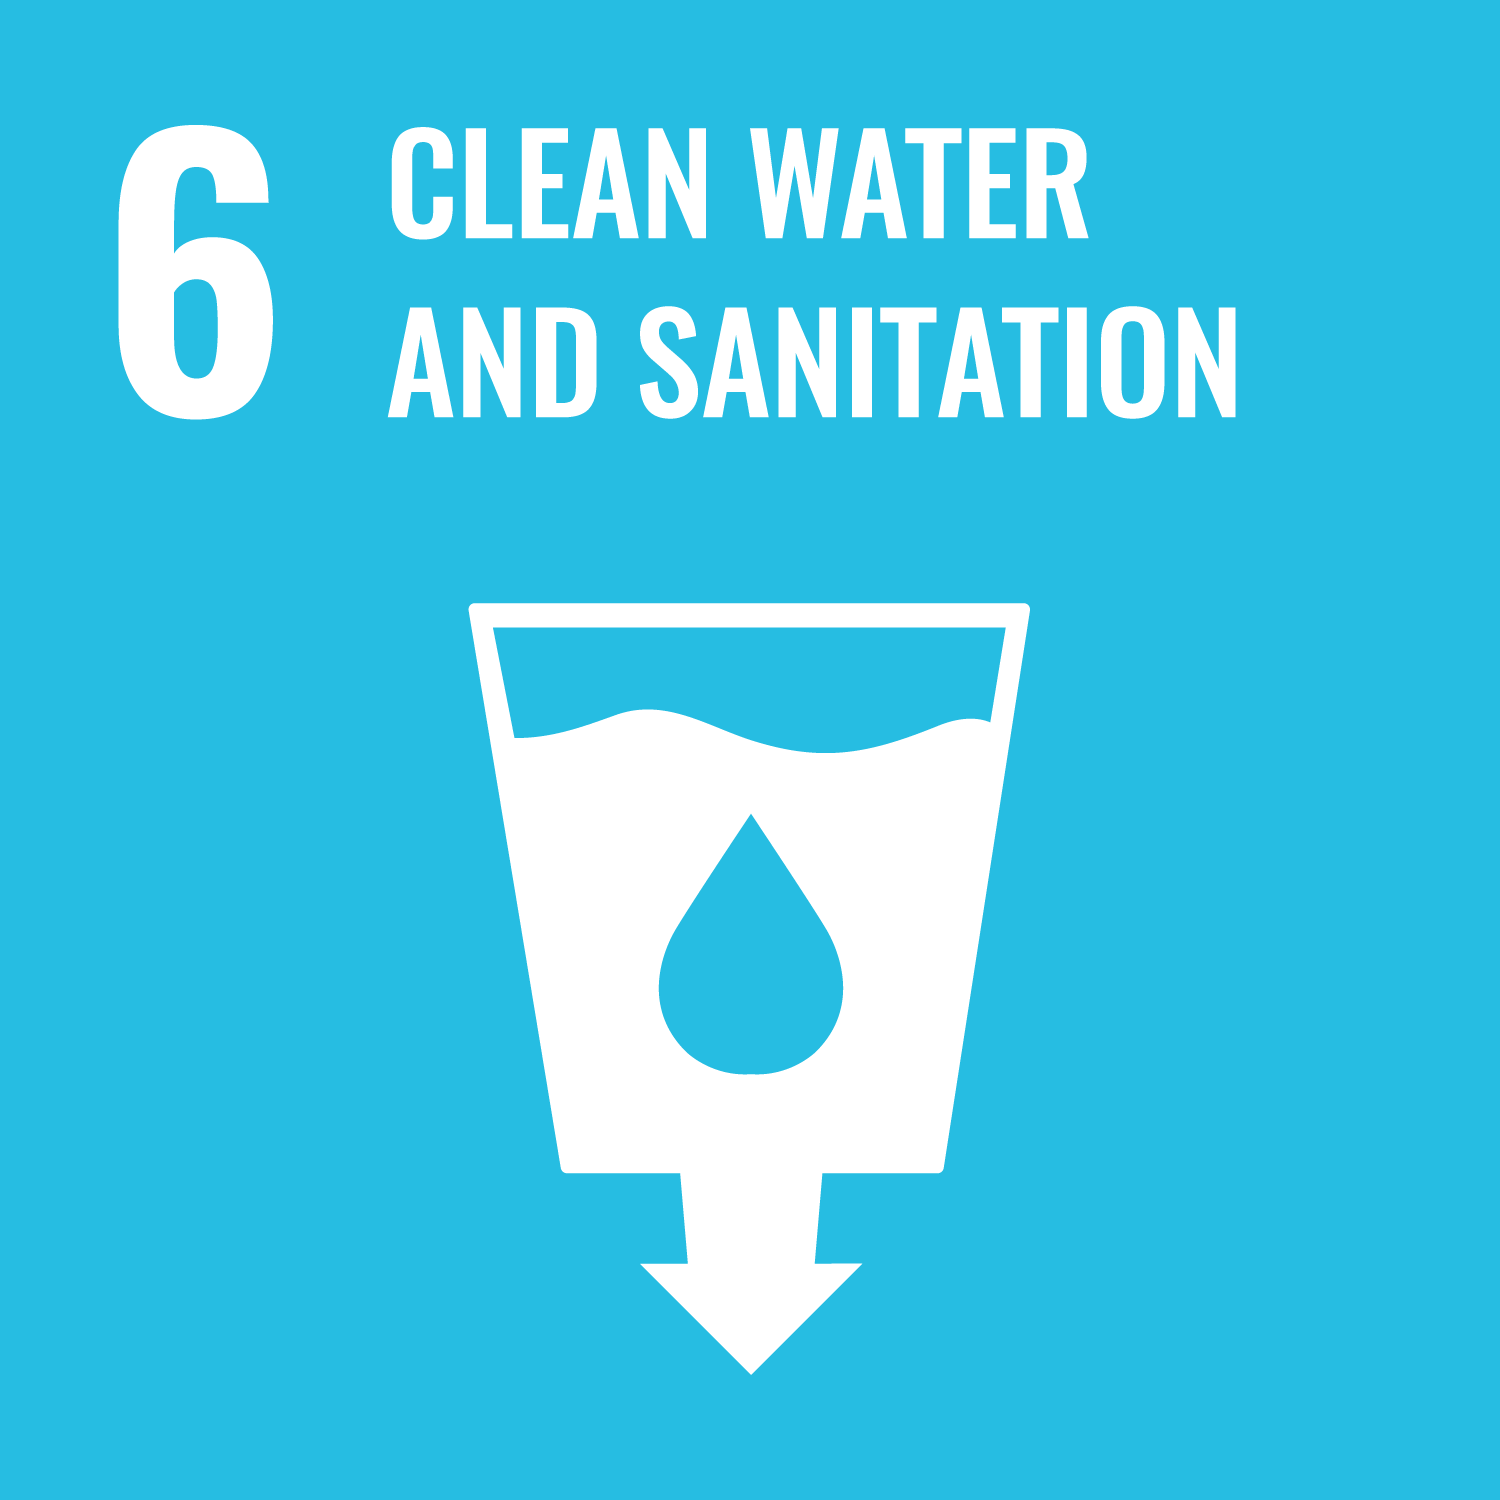 SDGs 淨水及衛生-Clean Water and Sanitation圖示